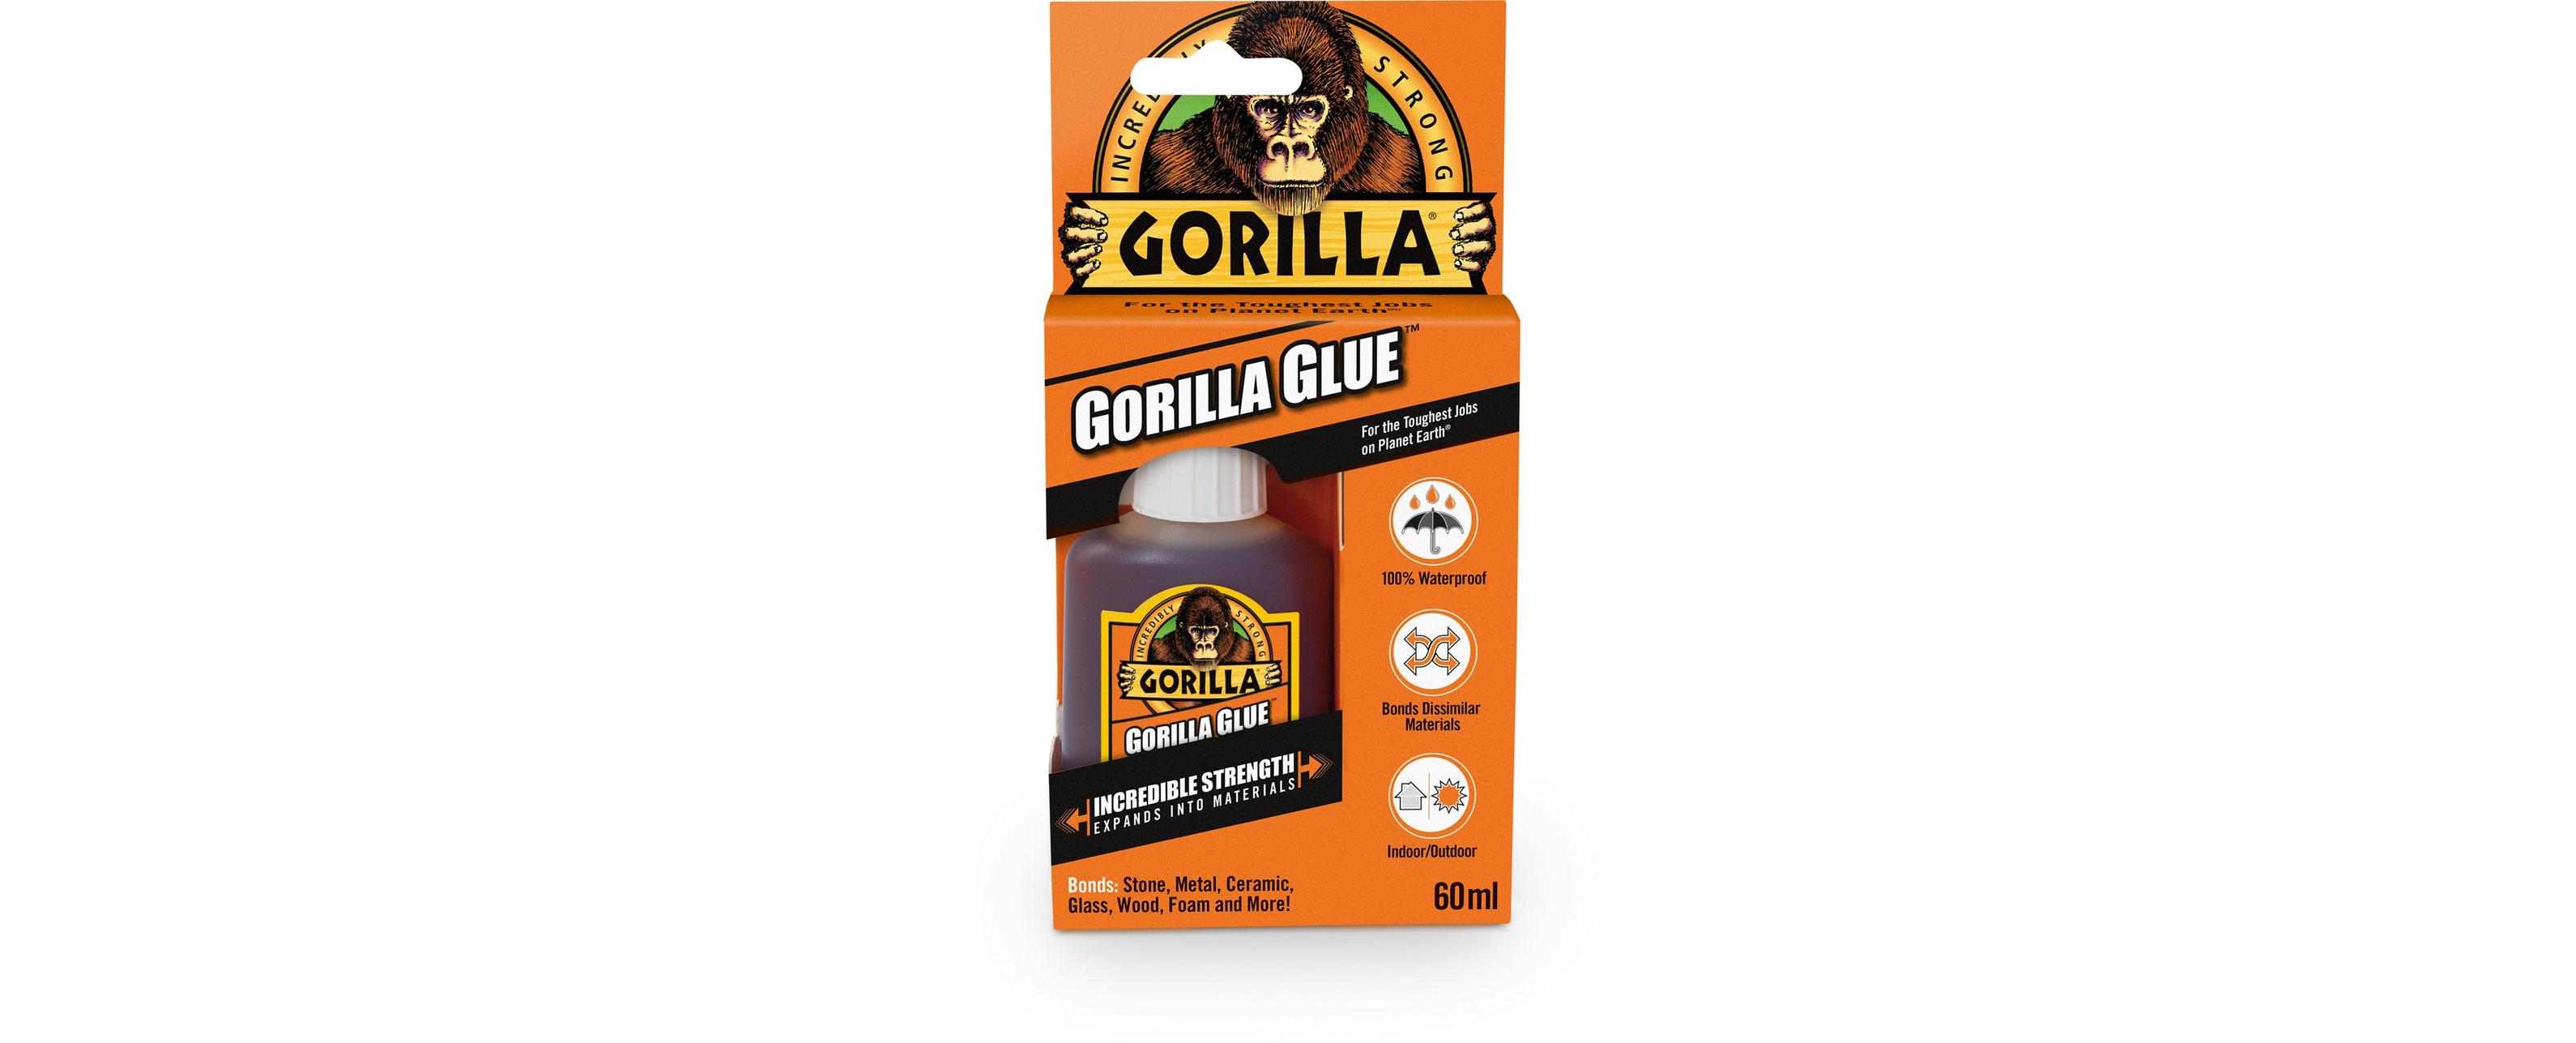 Gorilla Glue - Wikipedia